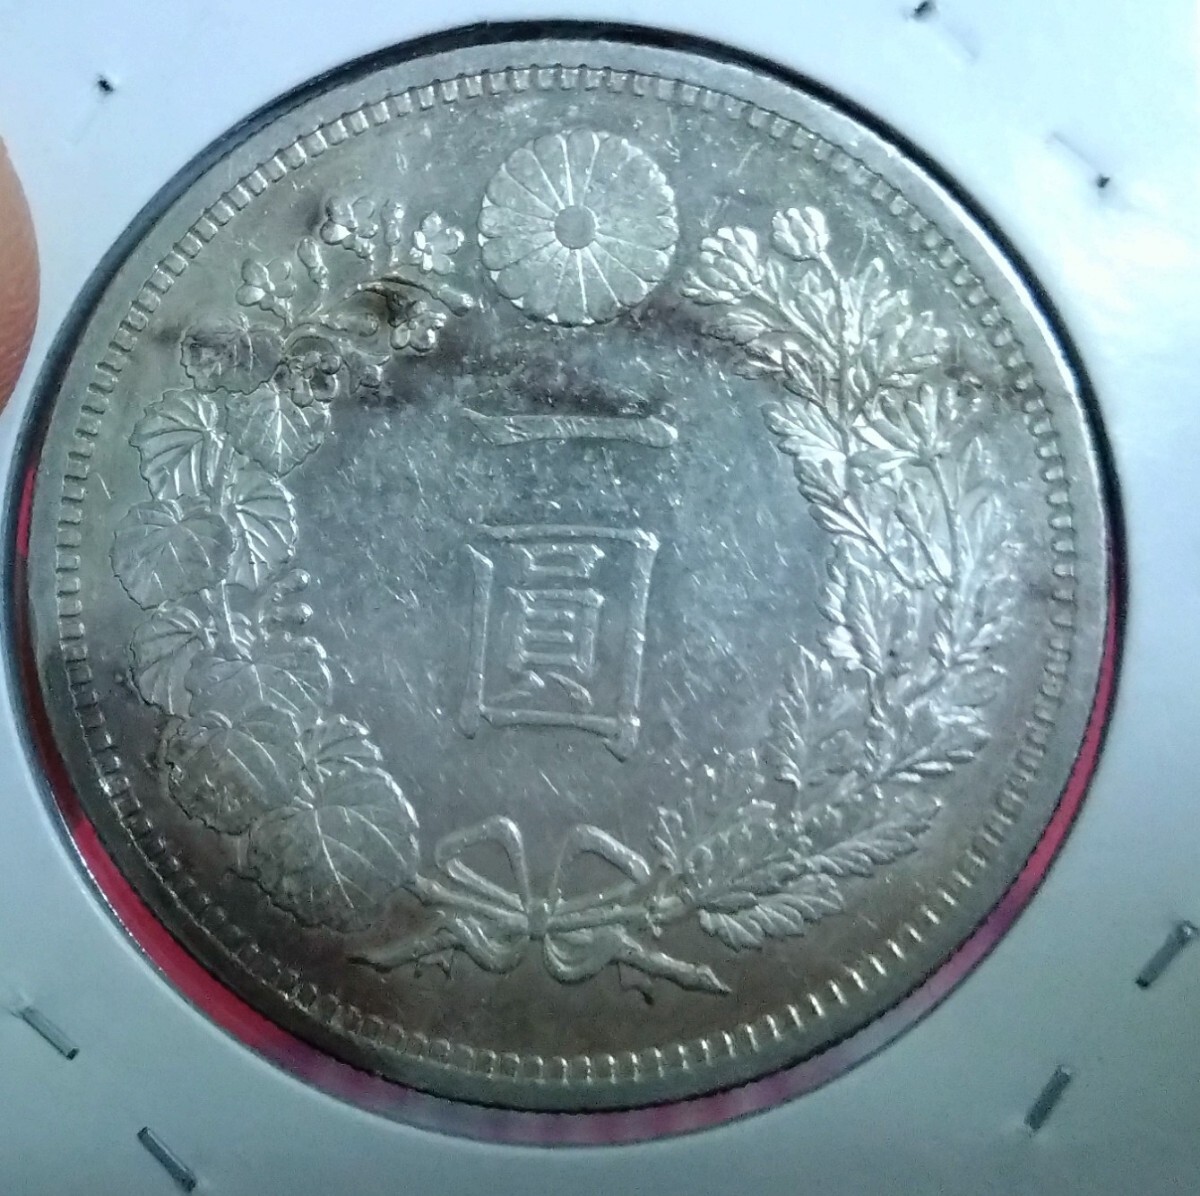 ■一円銀貨 明治15年の画像1